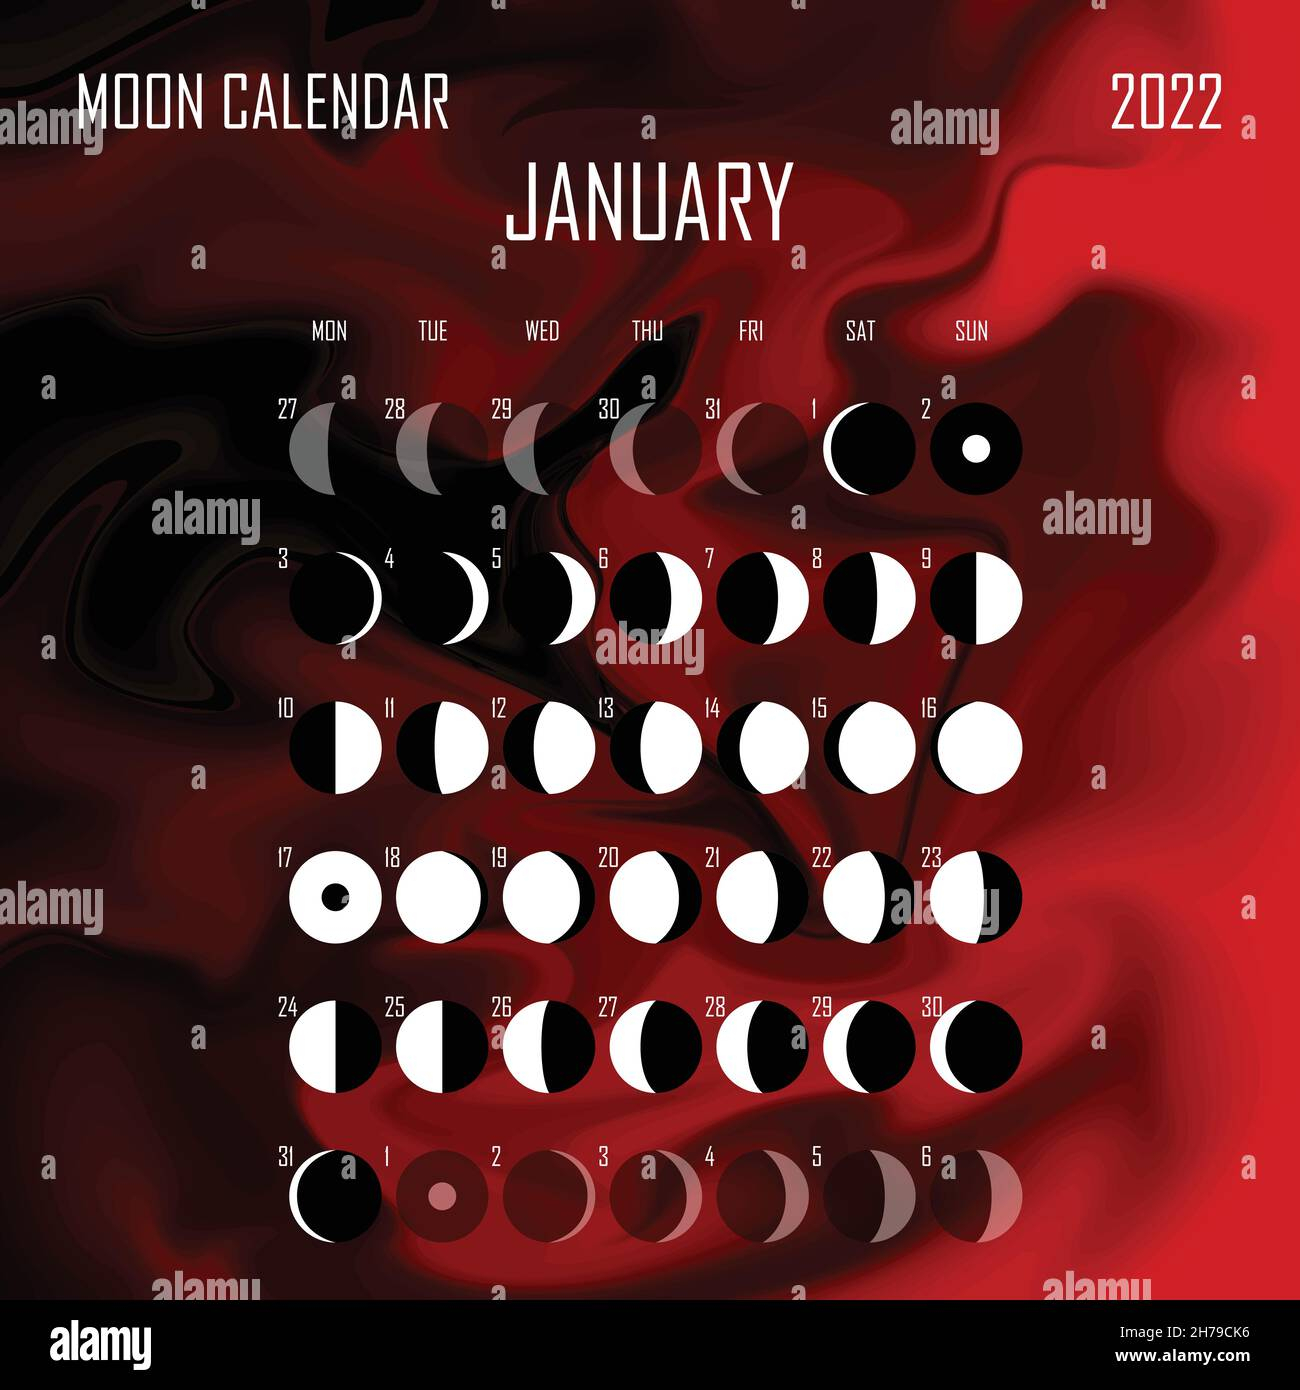 Take Lunar Calendar 2022 January